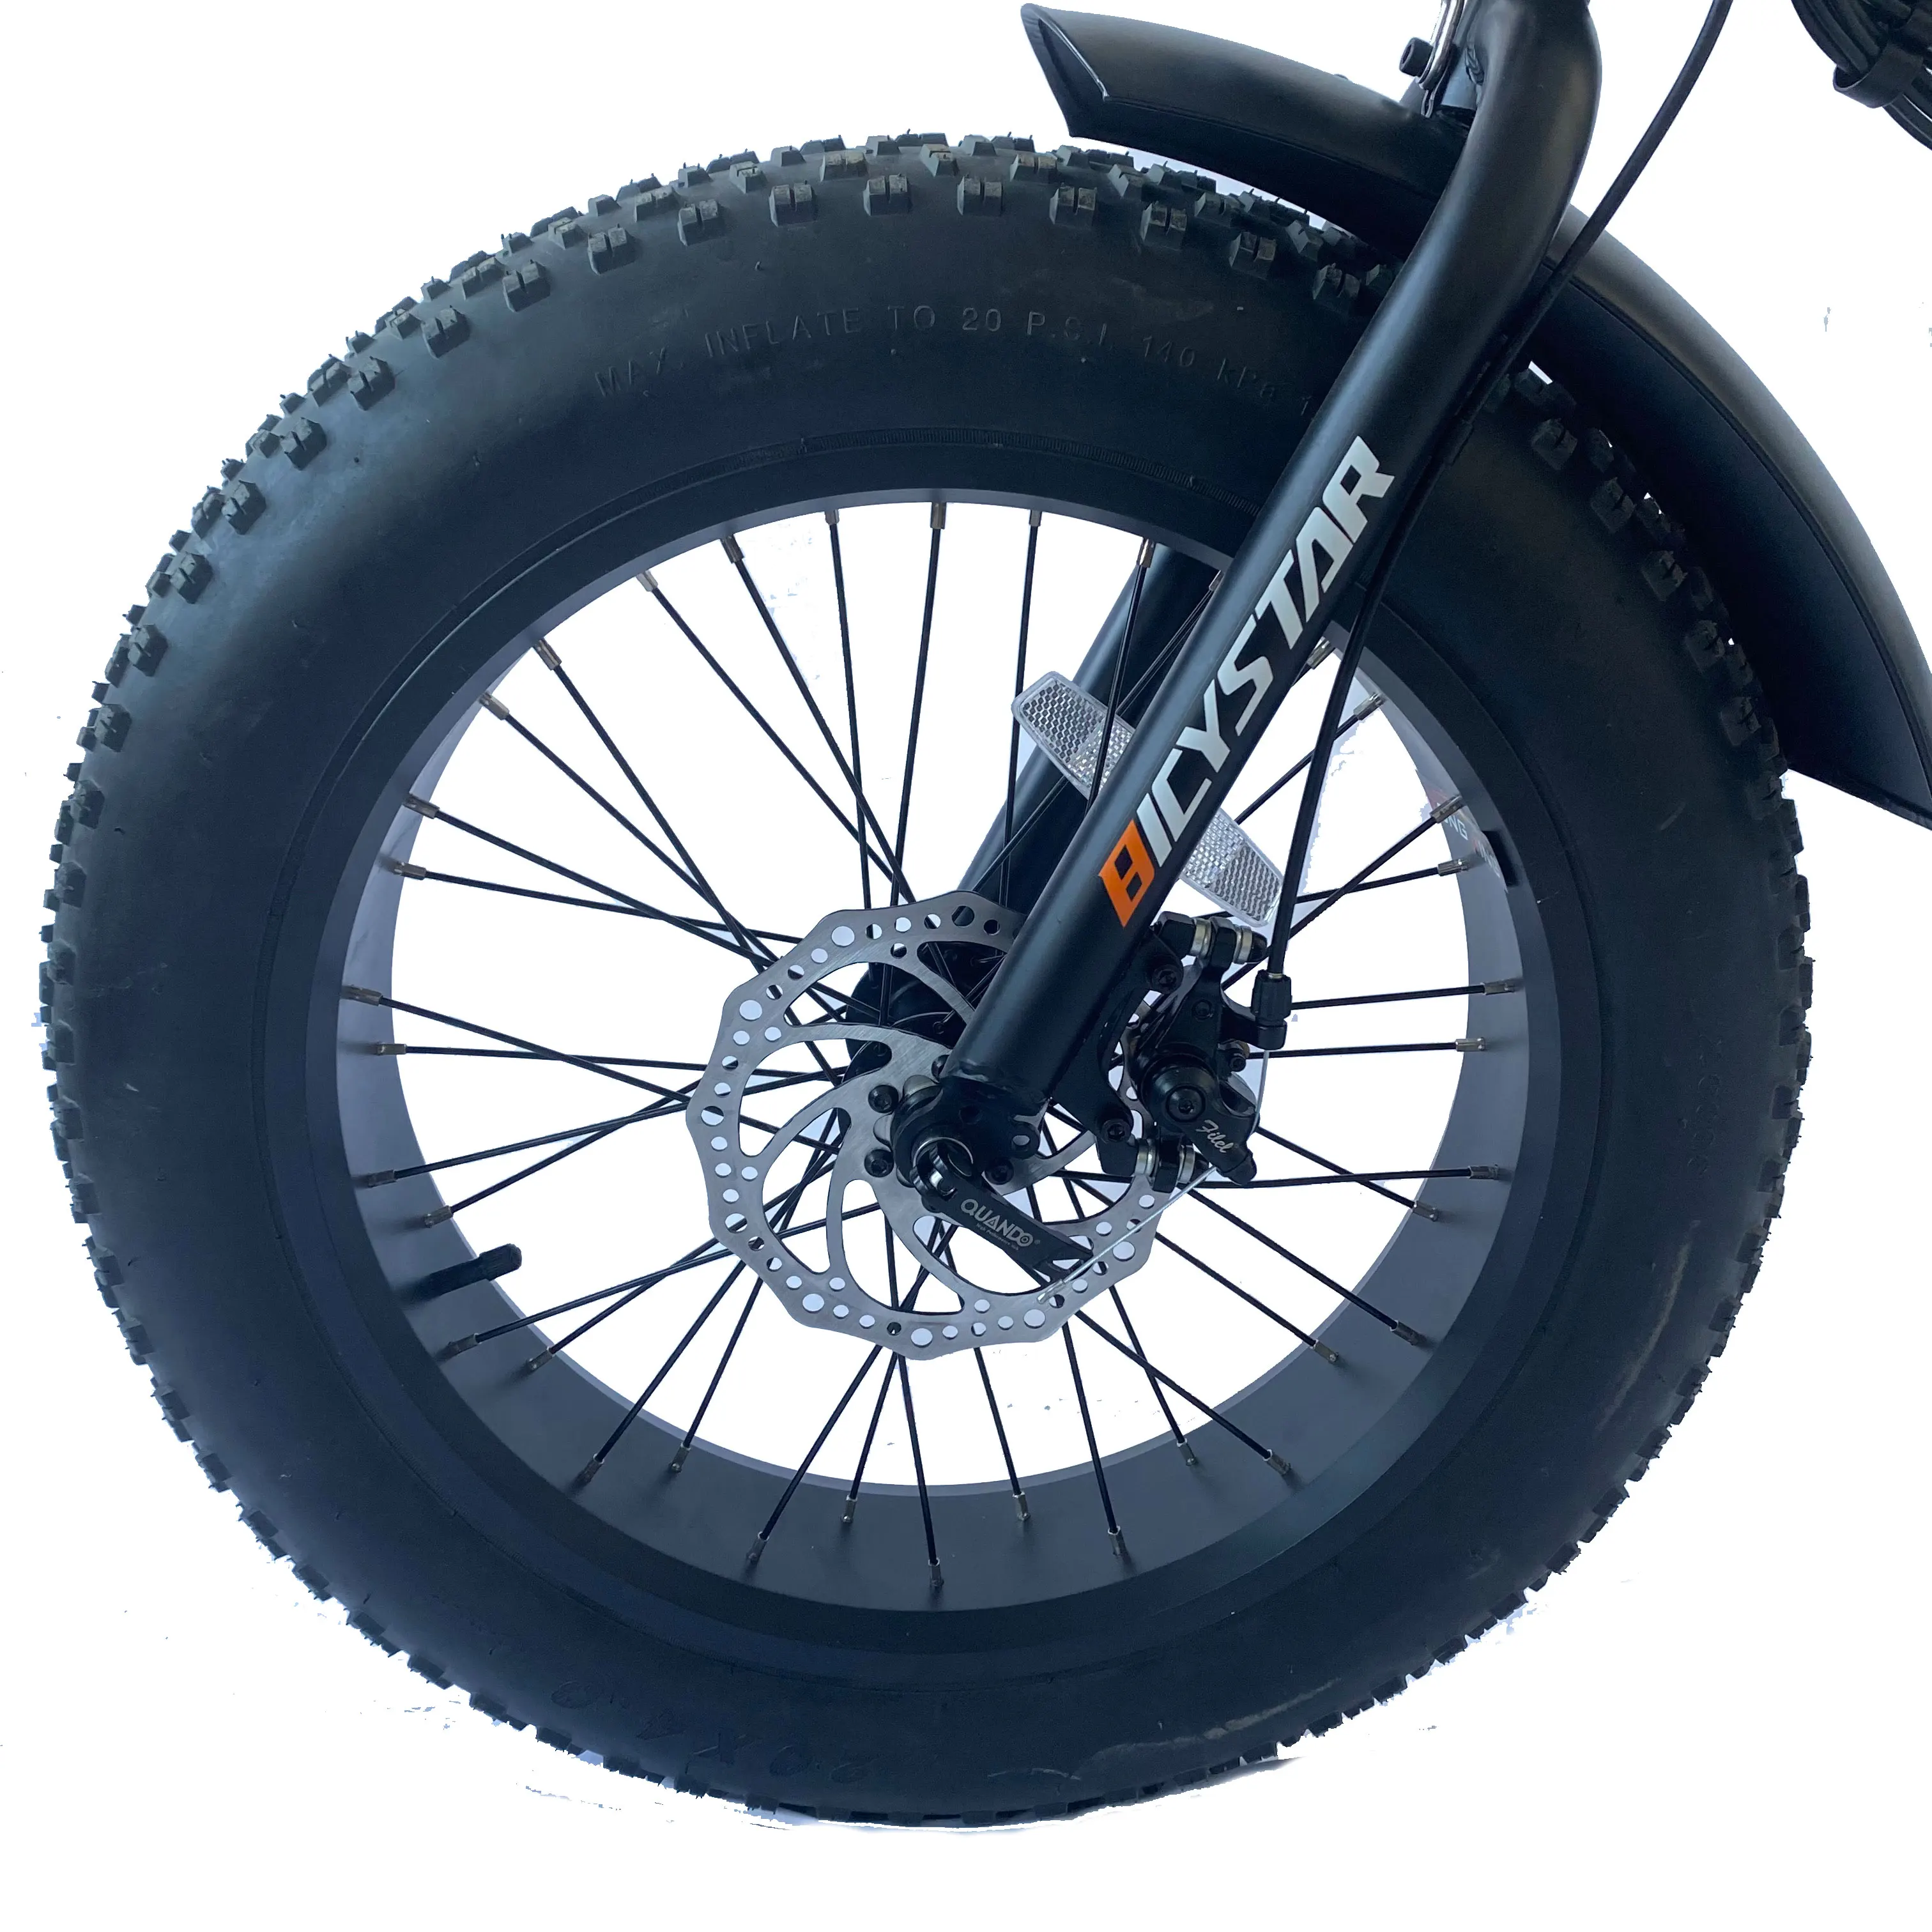 
OEM 20 inch 48v 250W fat tire foldable folding pera bicicleta electrica plegable ebike electric bicycle sepeda lipat listrik 